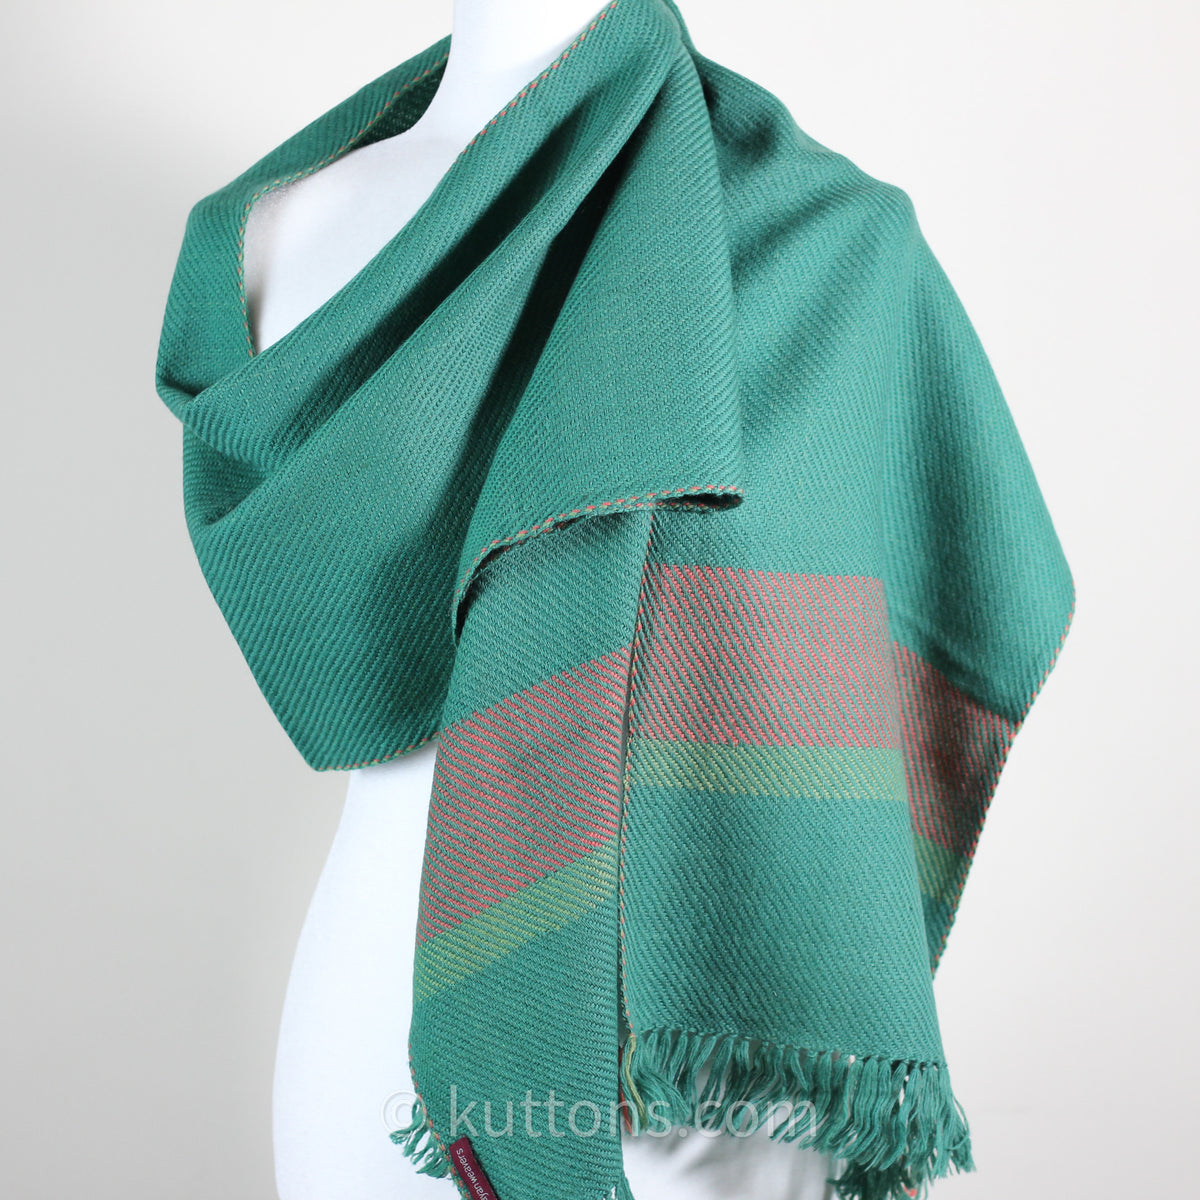 Handwoven Merino & Himalayan Woolen Scarf - Naturally Dyed with Indigo, Madder & Tesu Flowers | Green, 13"x78"